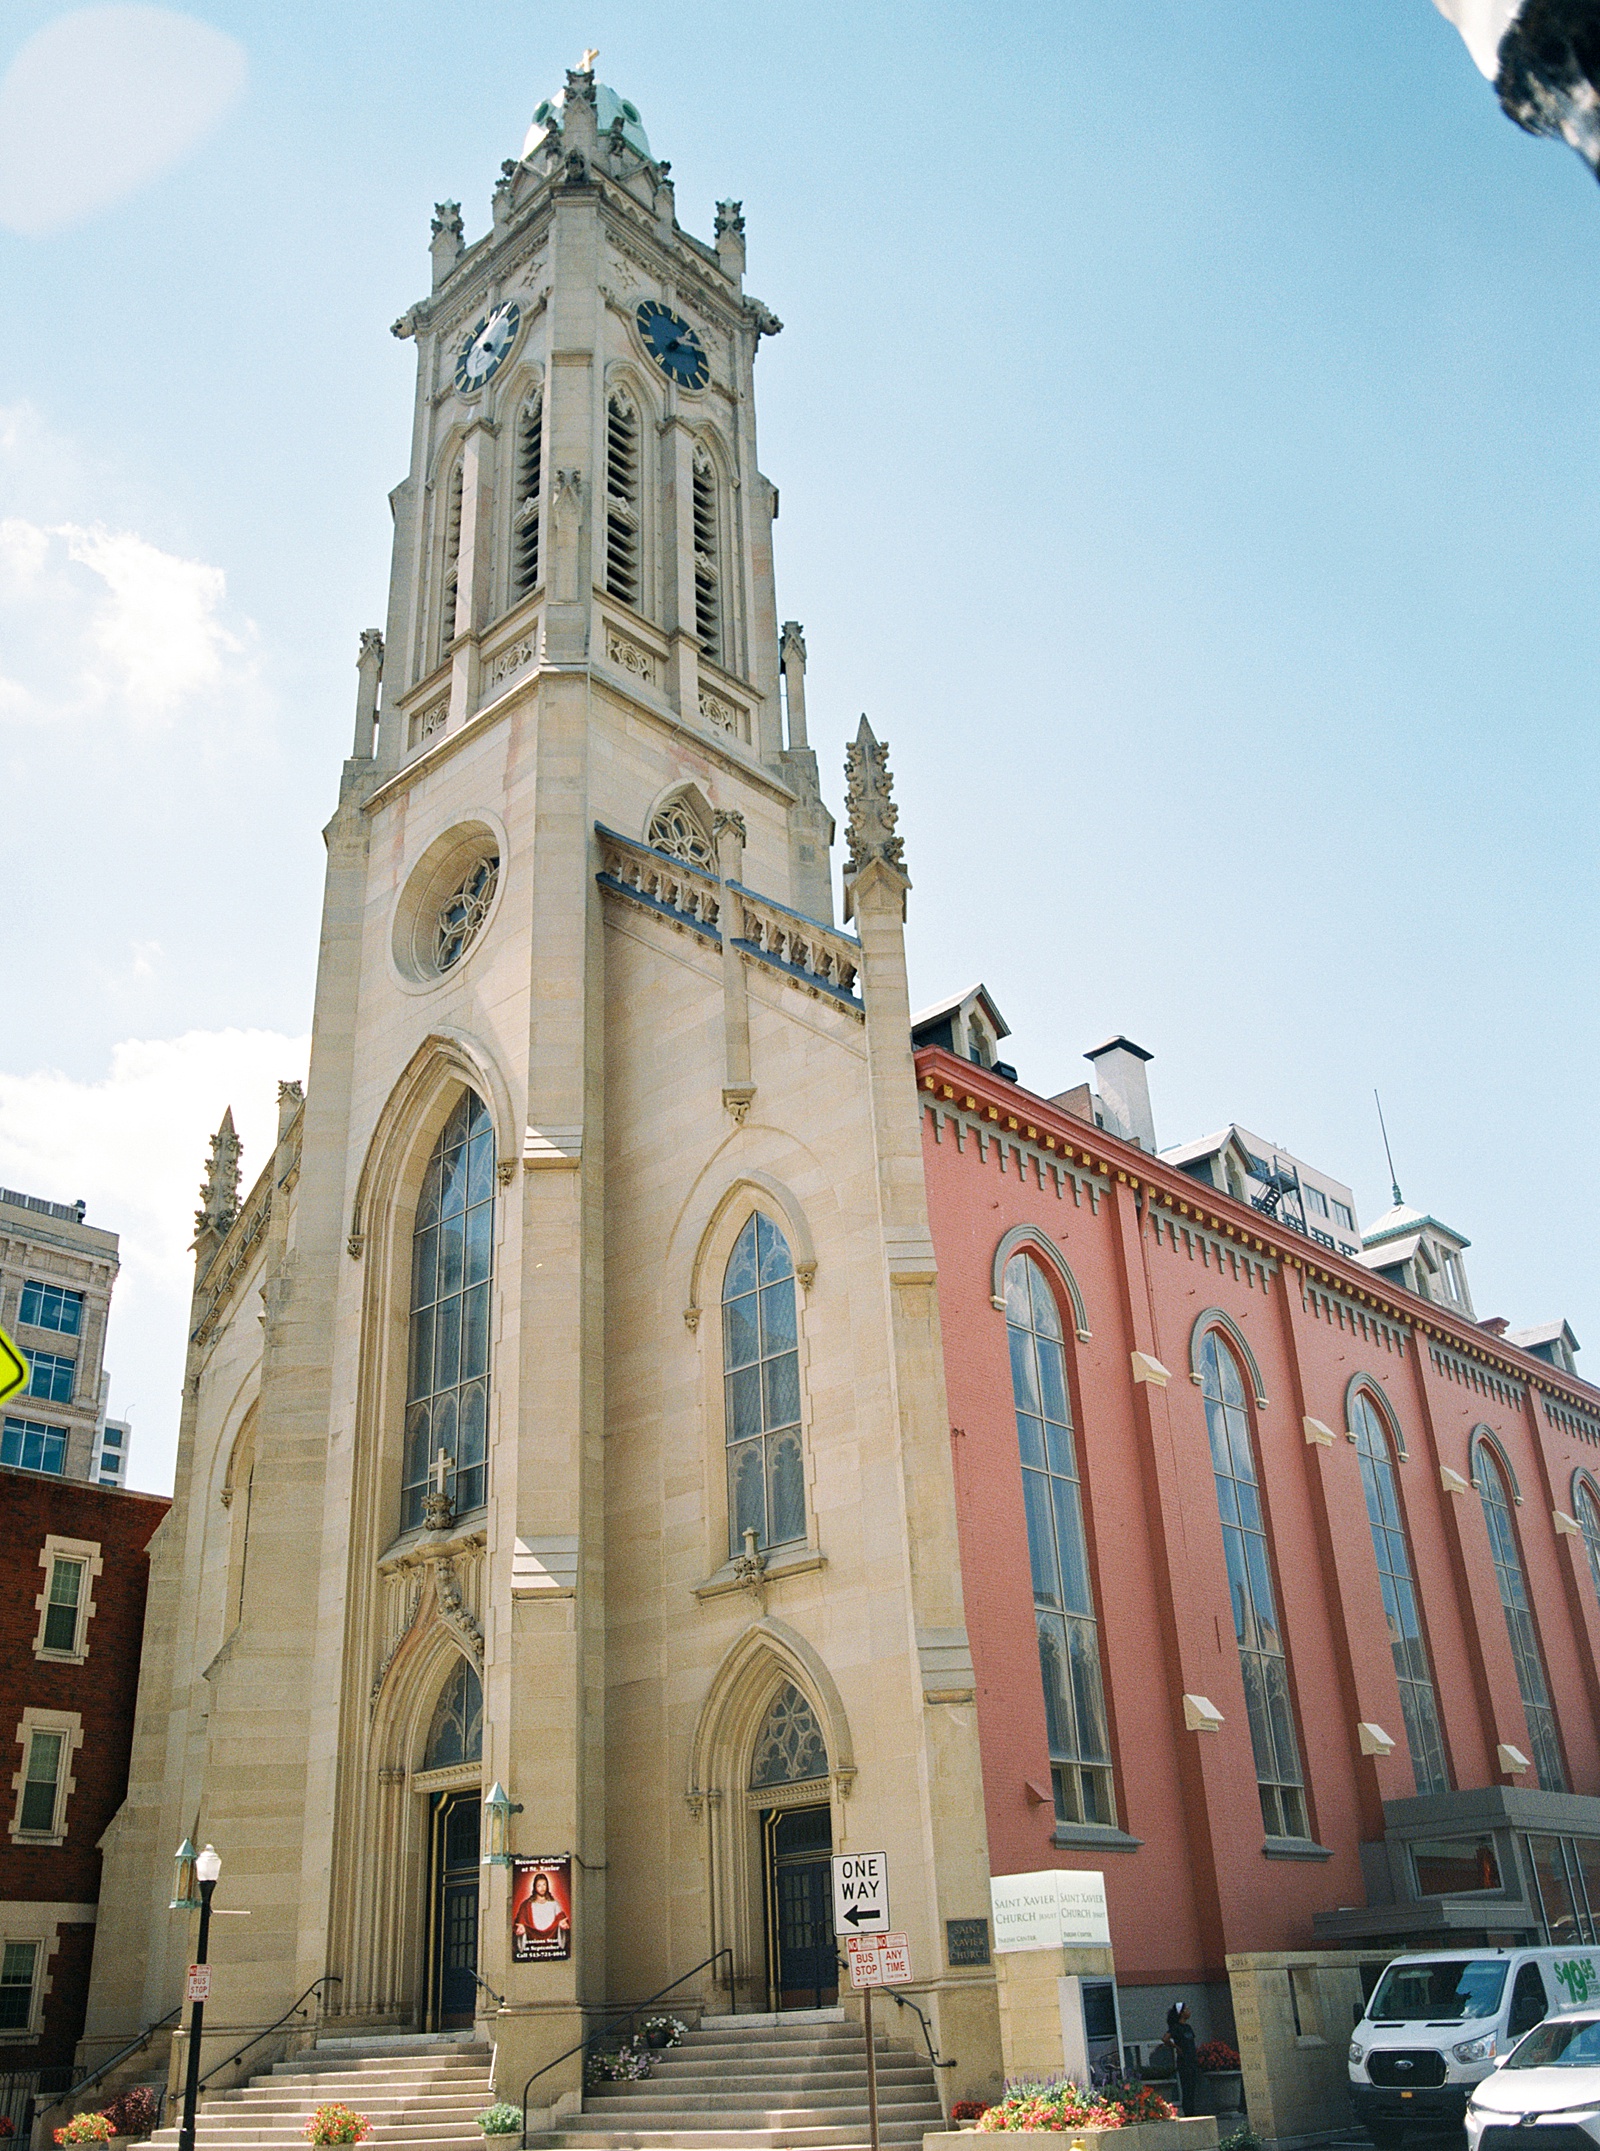 Exterior Picture of St. Xavier in Downtown Cincinnati before Wedding